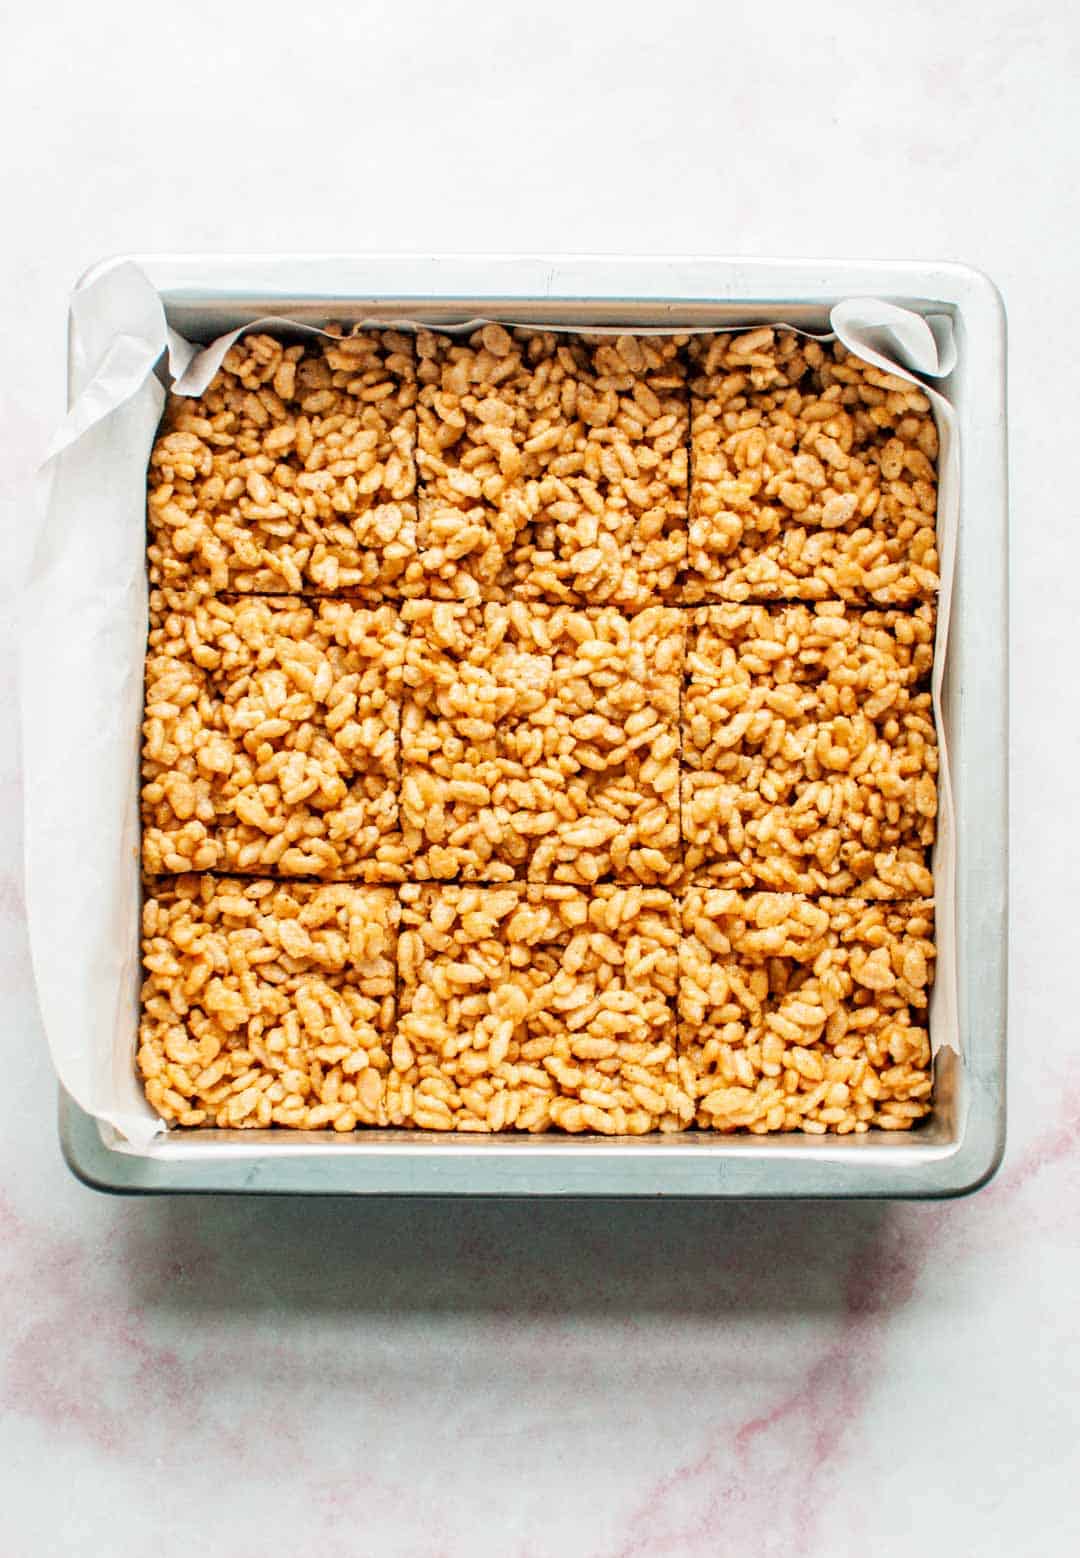 Peanut butter rice krispie treats in a pan cut into nine pieces.